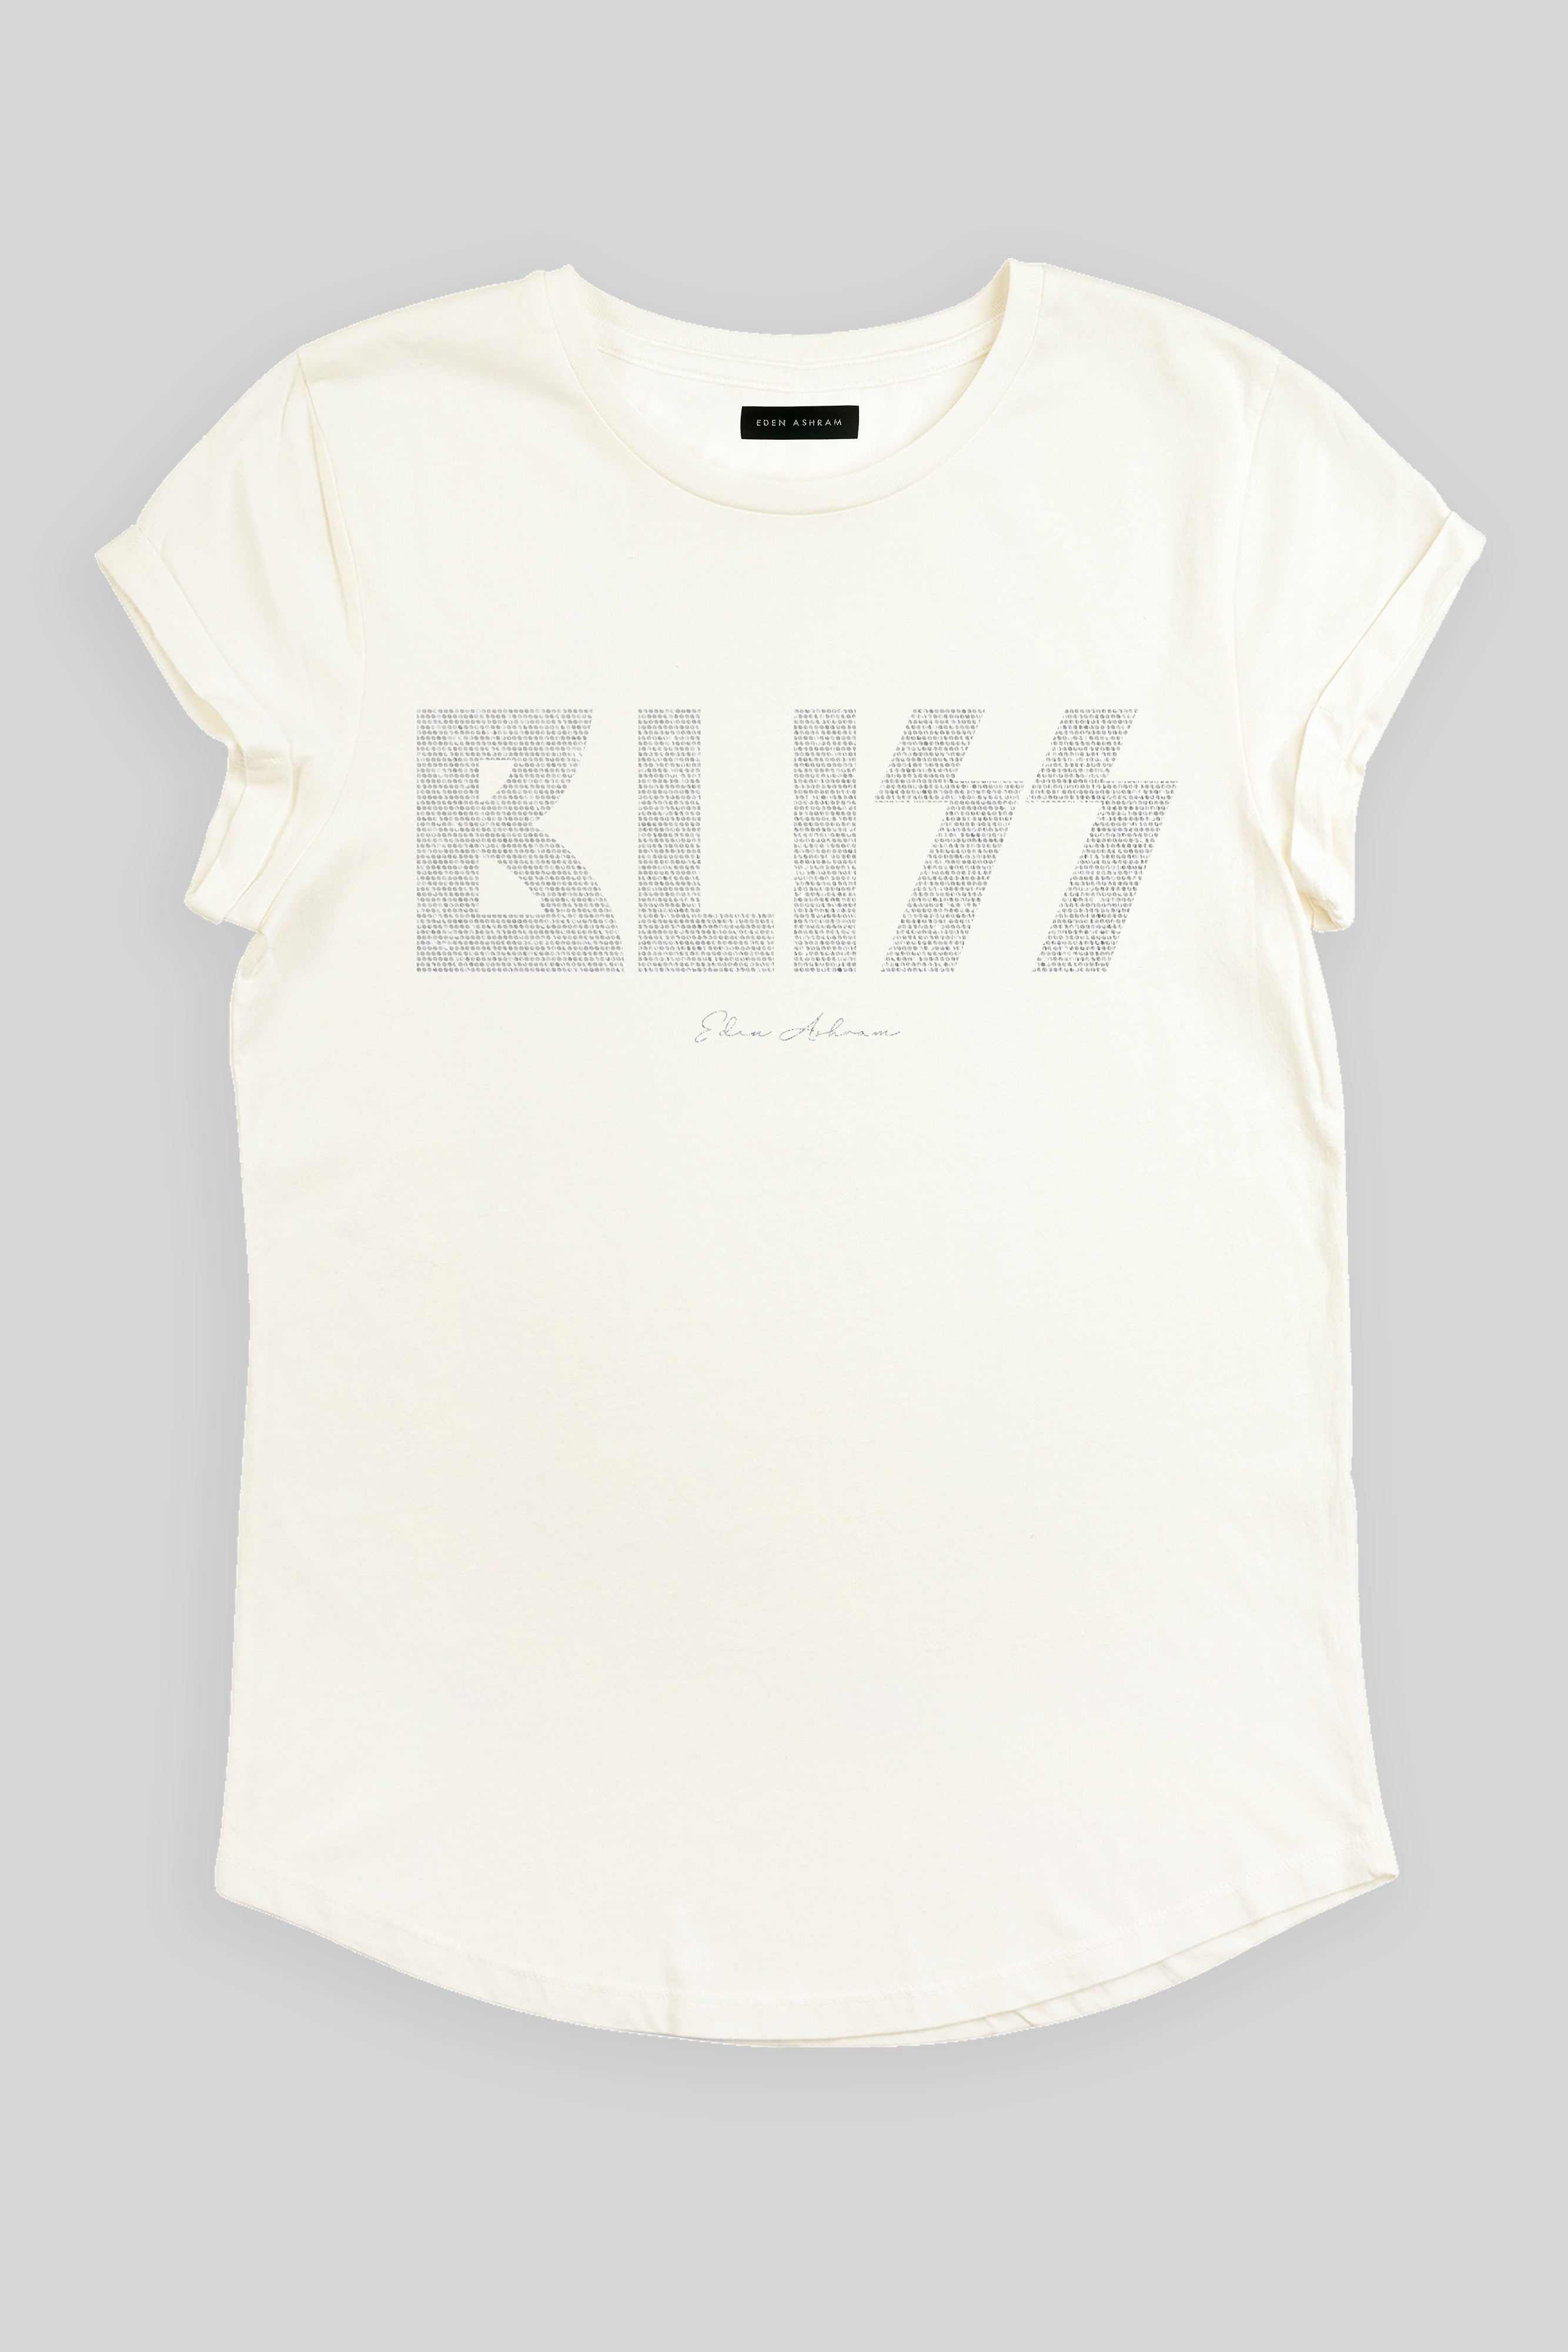 EDEN ASHRAM BLISS Rolled Sleeve Tour T-Shirt Stonewash White | Silver